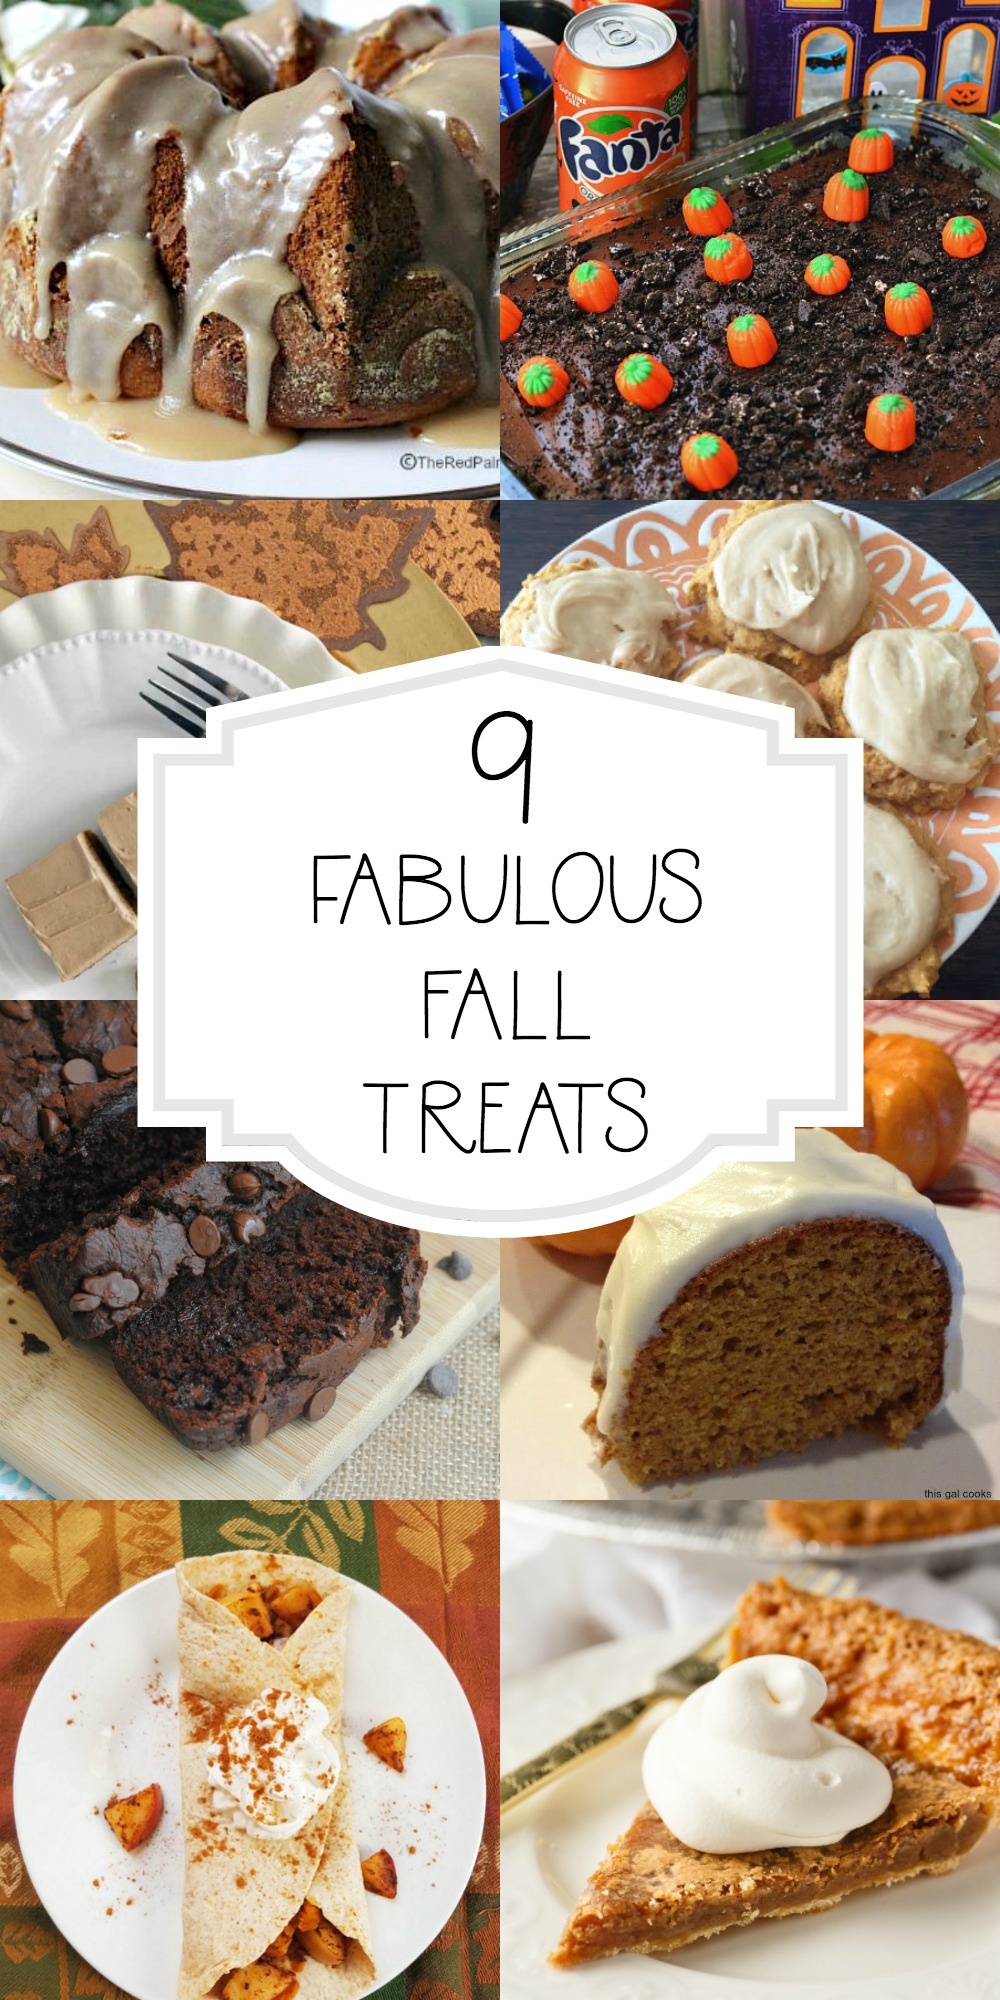 Fall Sweets and Treats